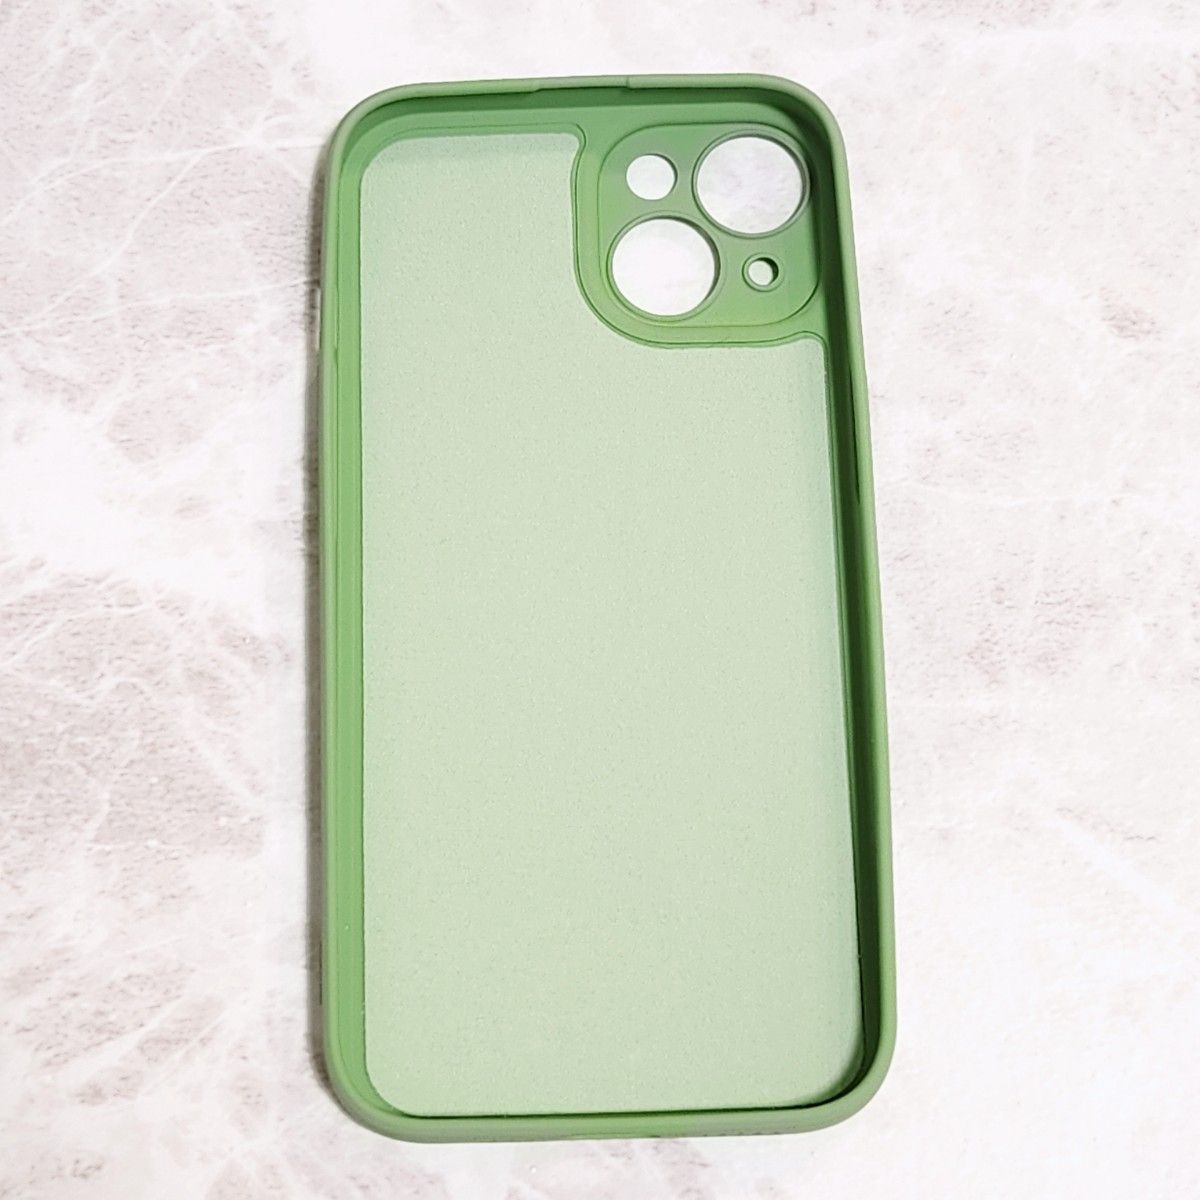 iPhone 11 pro用 ケース カバー 衝撃吸収 保護カバー グリーン